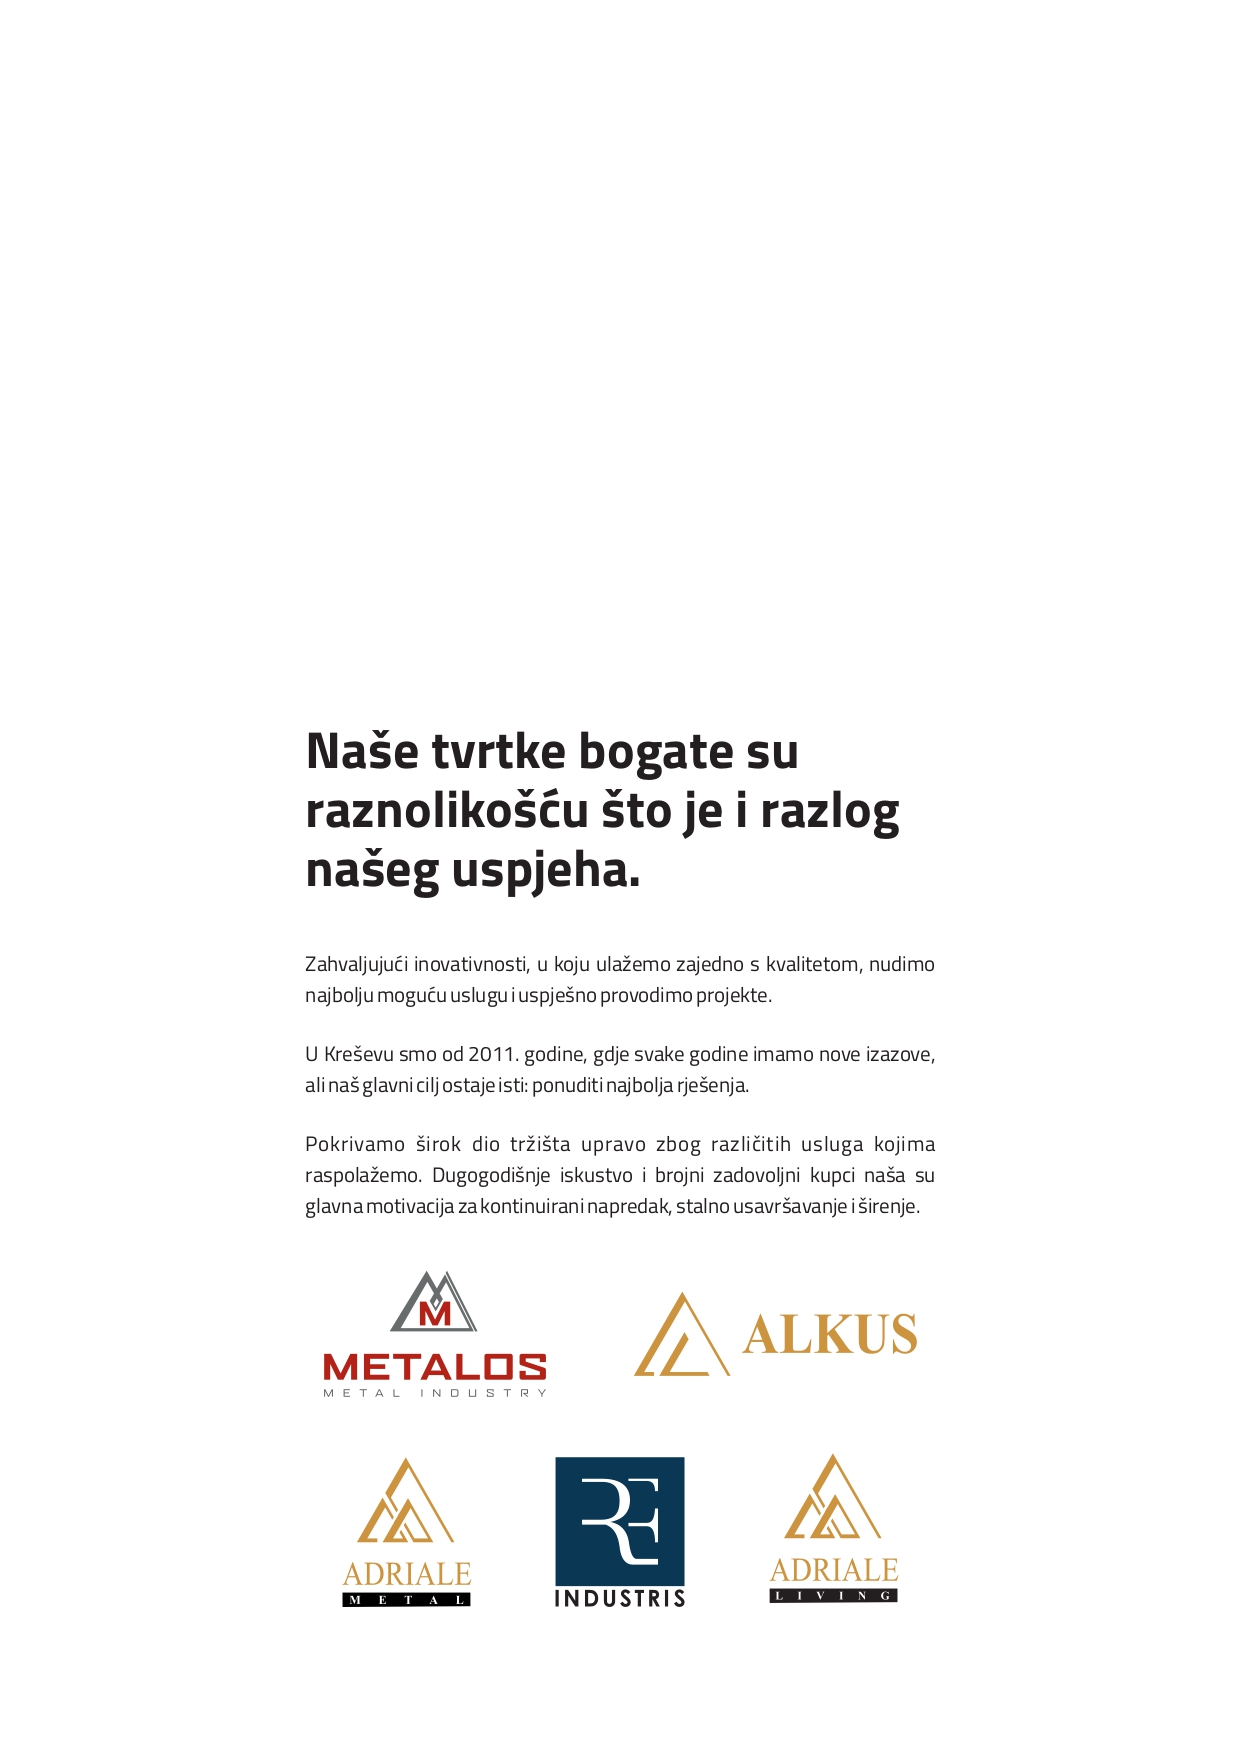 METALOS-ADRIALE._ALKUS-KATALOG_page-0003.jpg